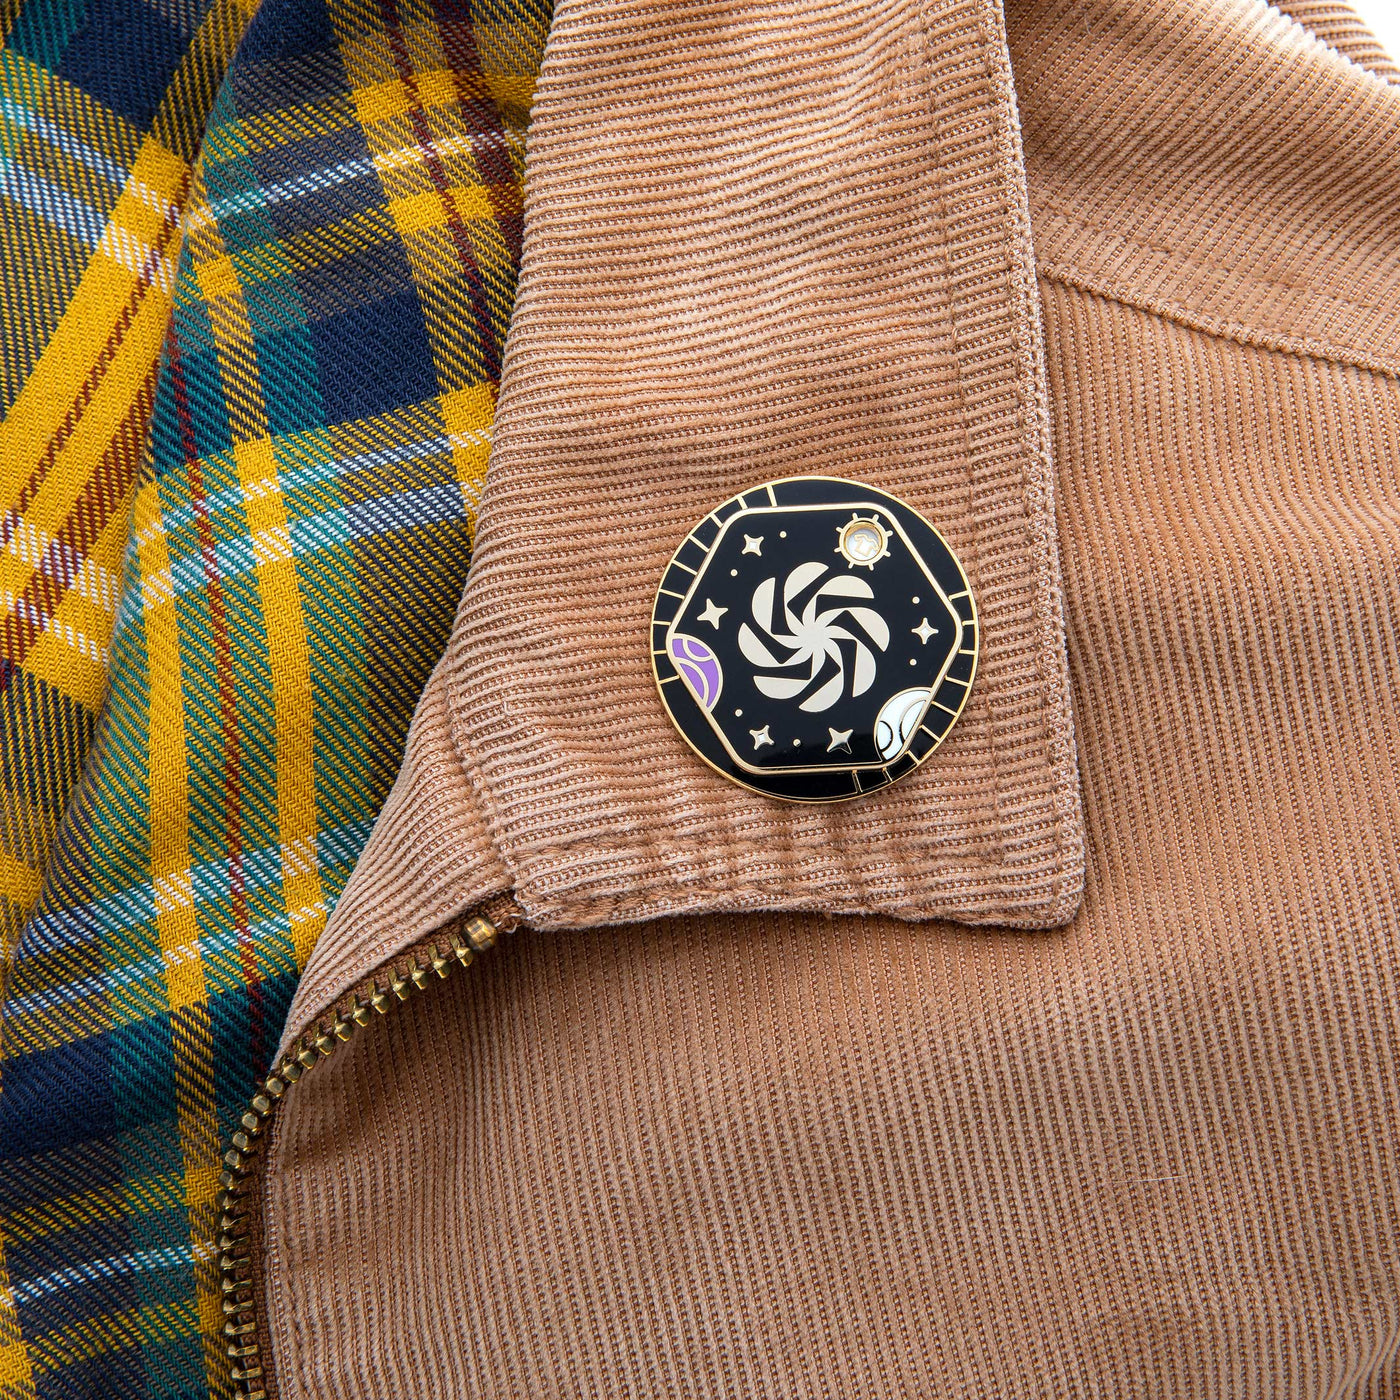 Wormhole Pin on Jacket